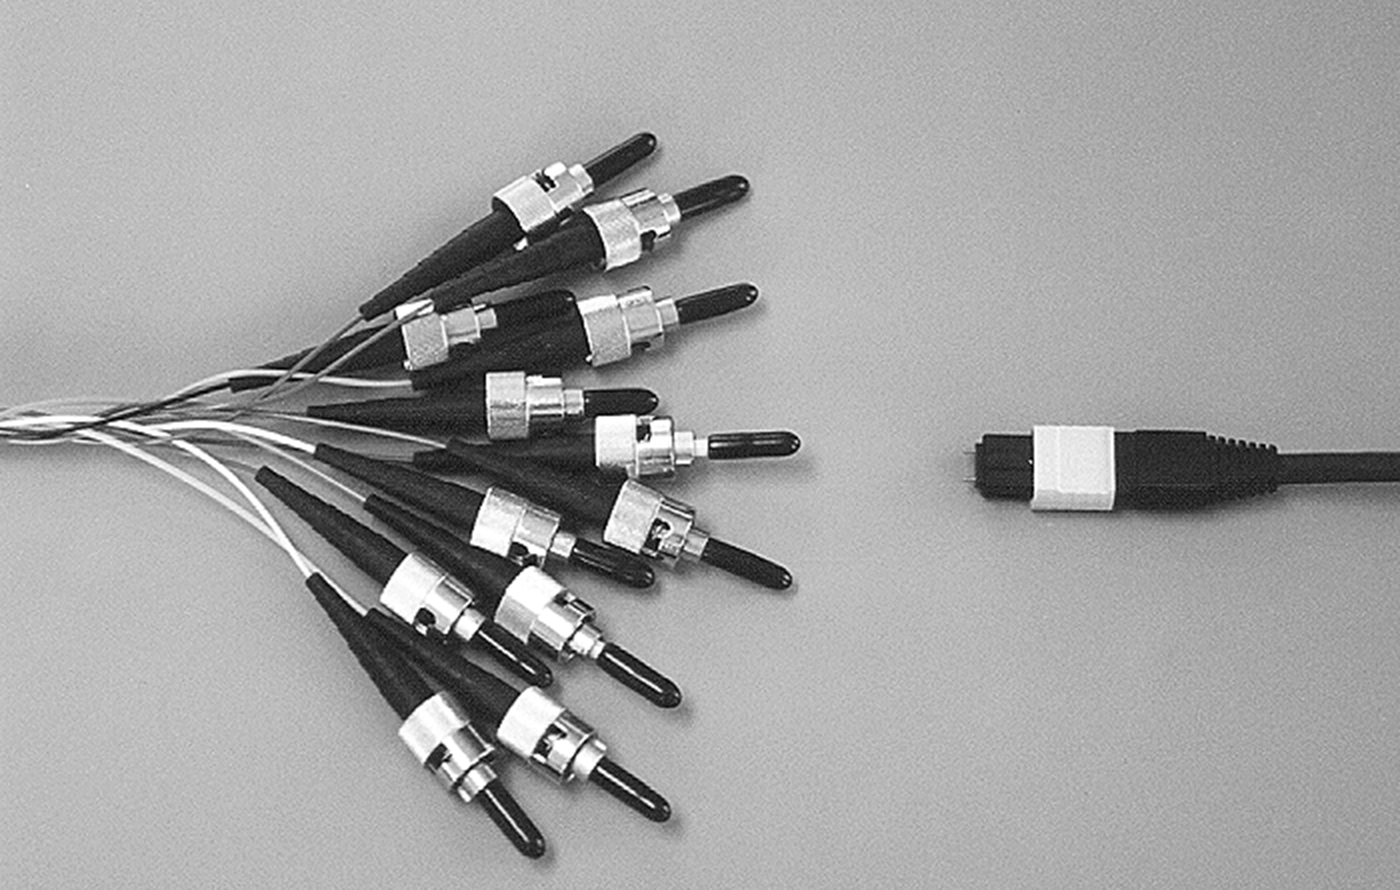 Cable fibra óptica  Material eléctrico barato ≫Comprar